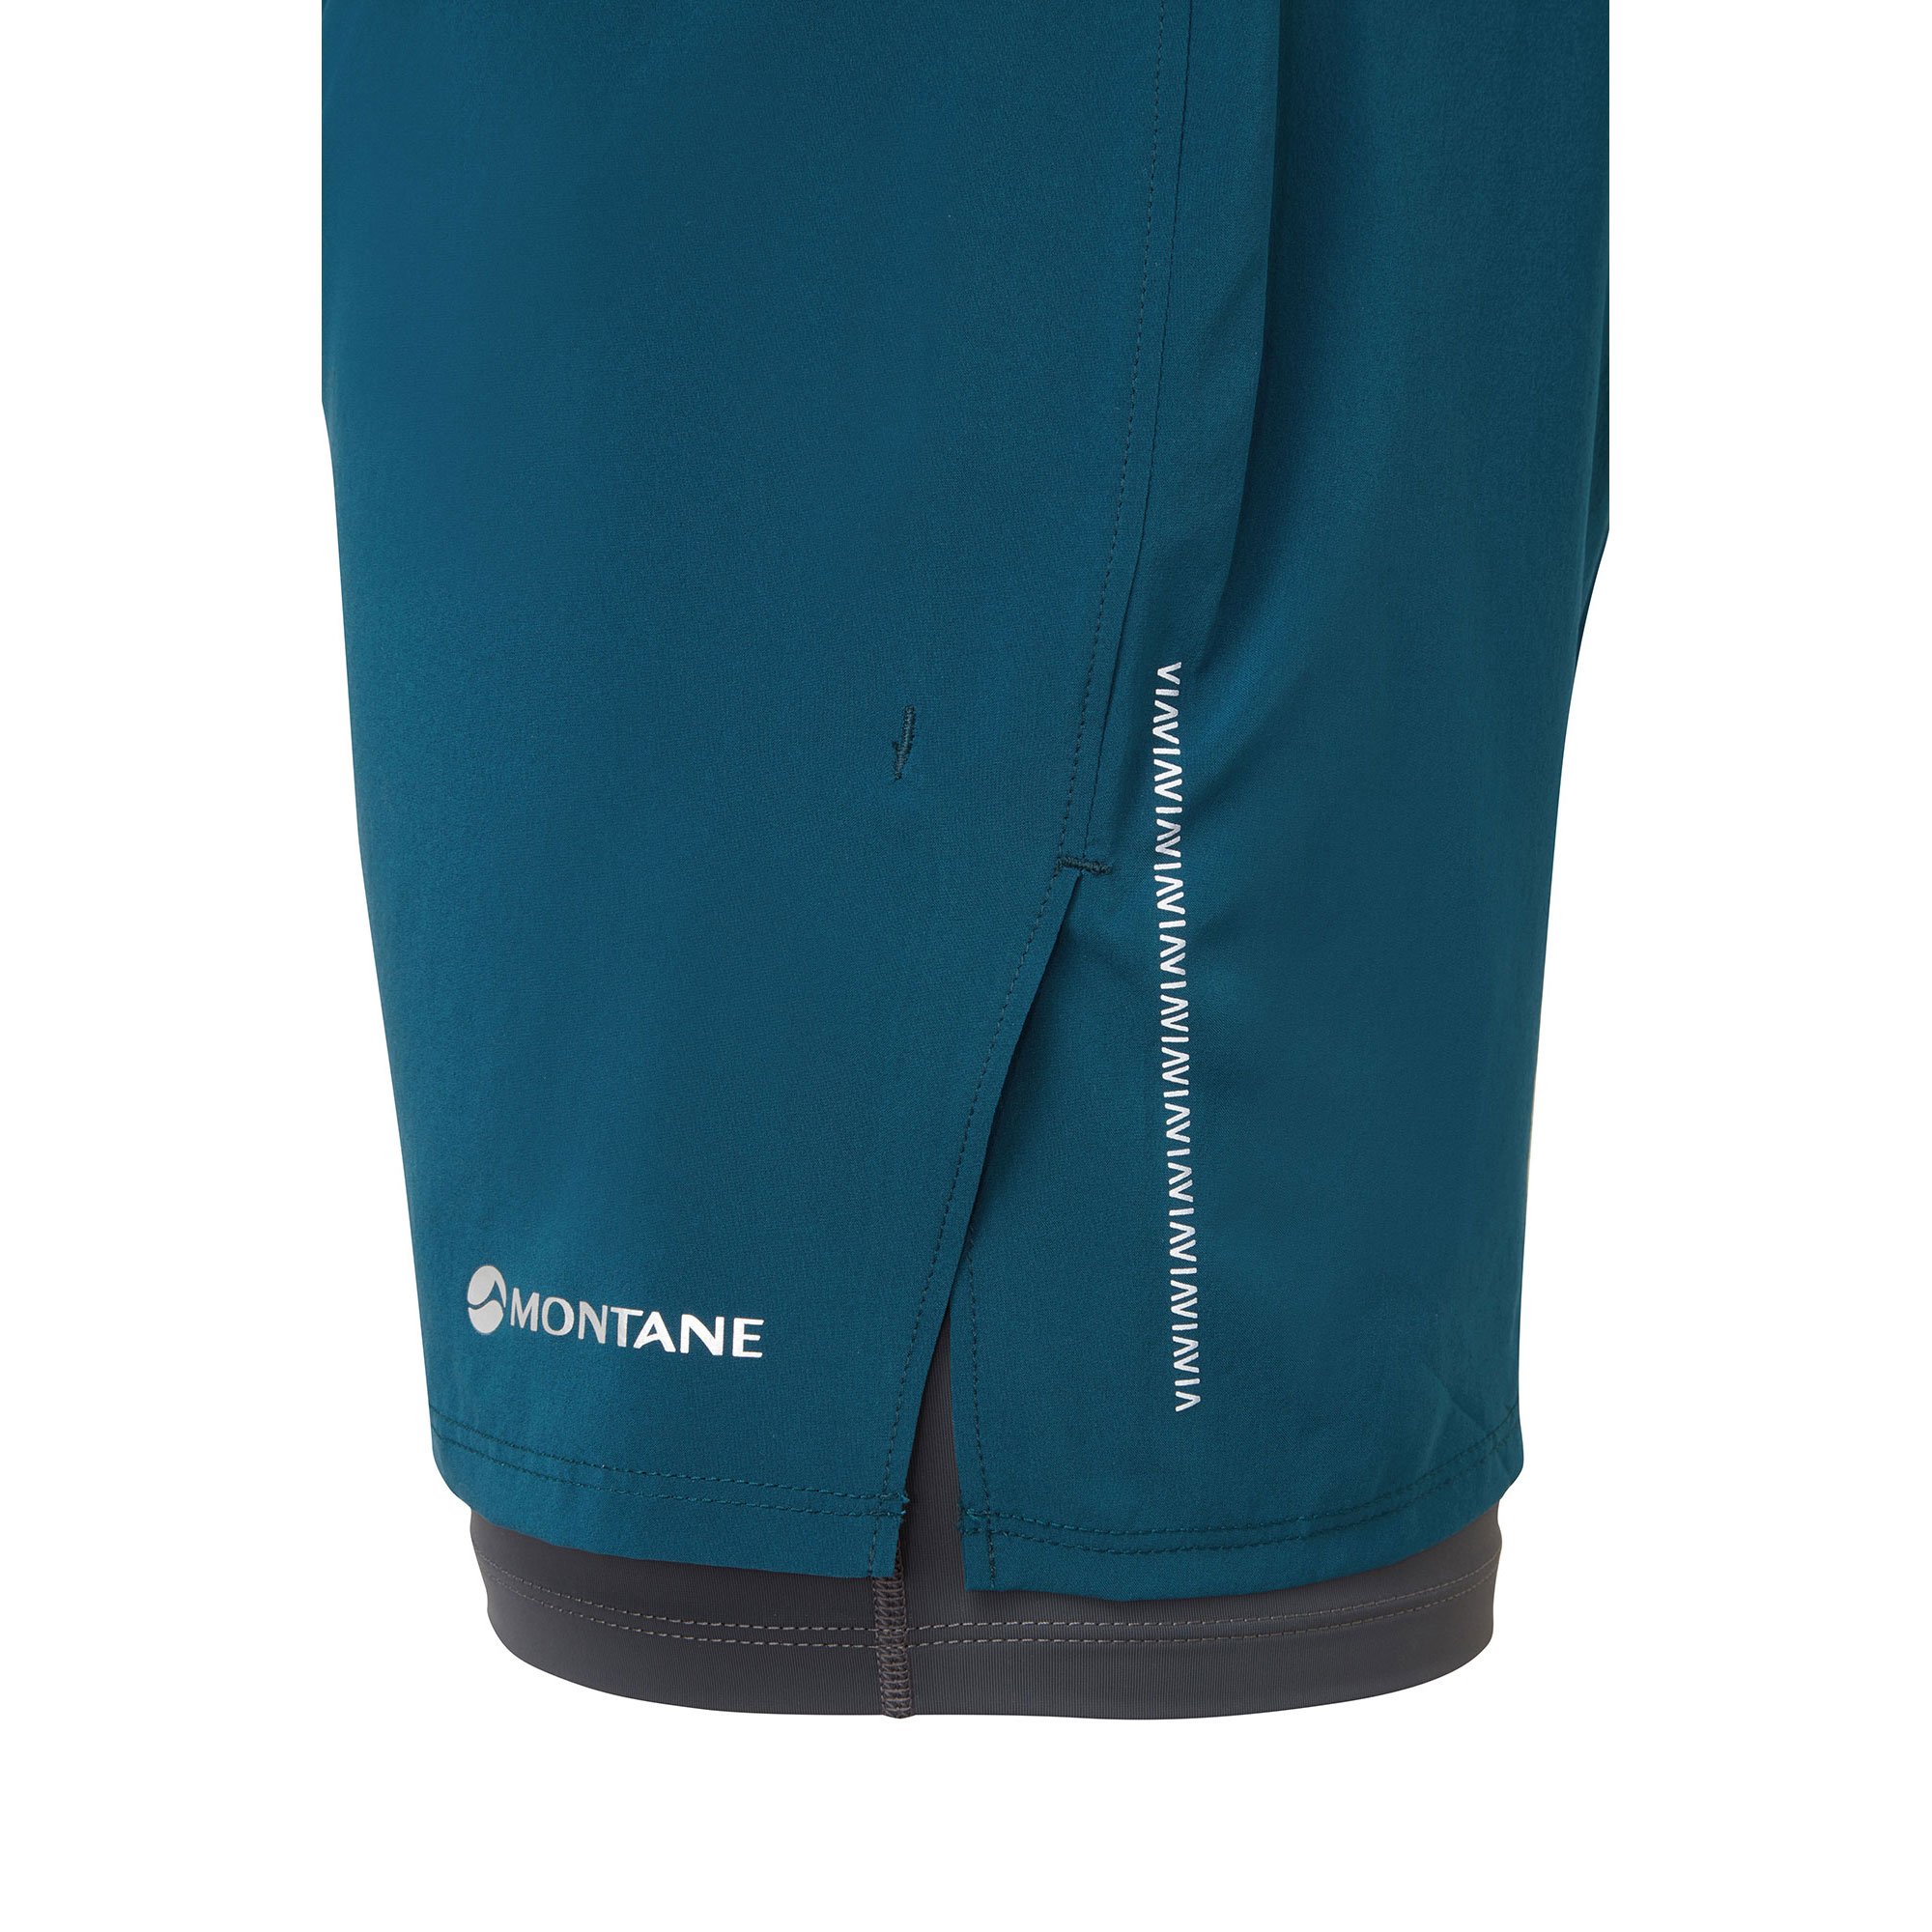 montane shorts side